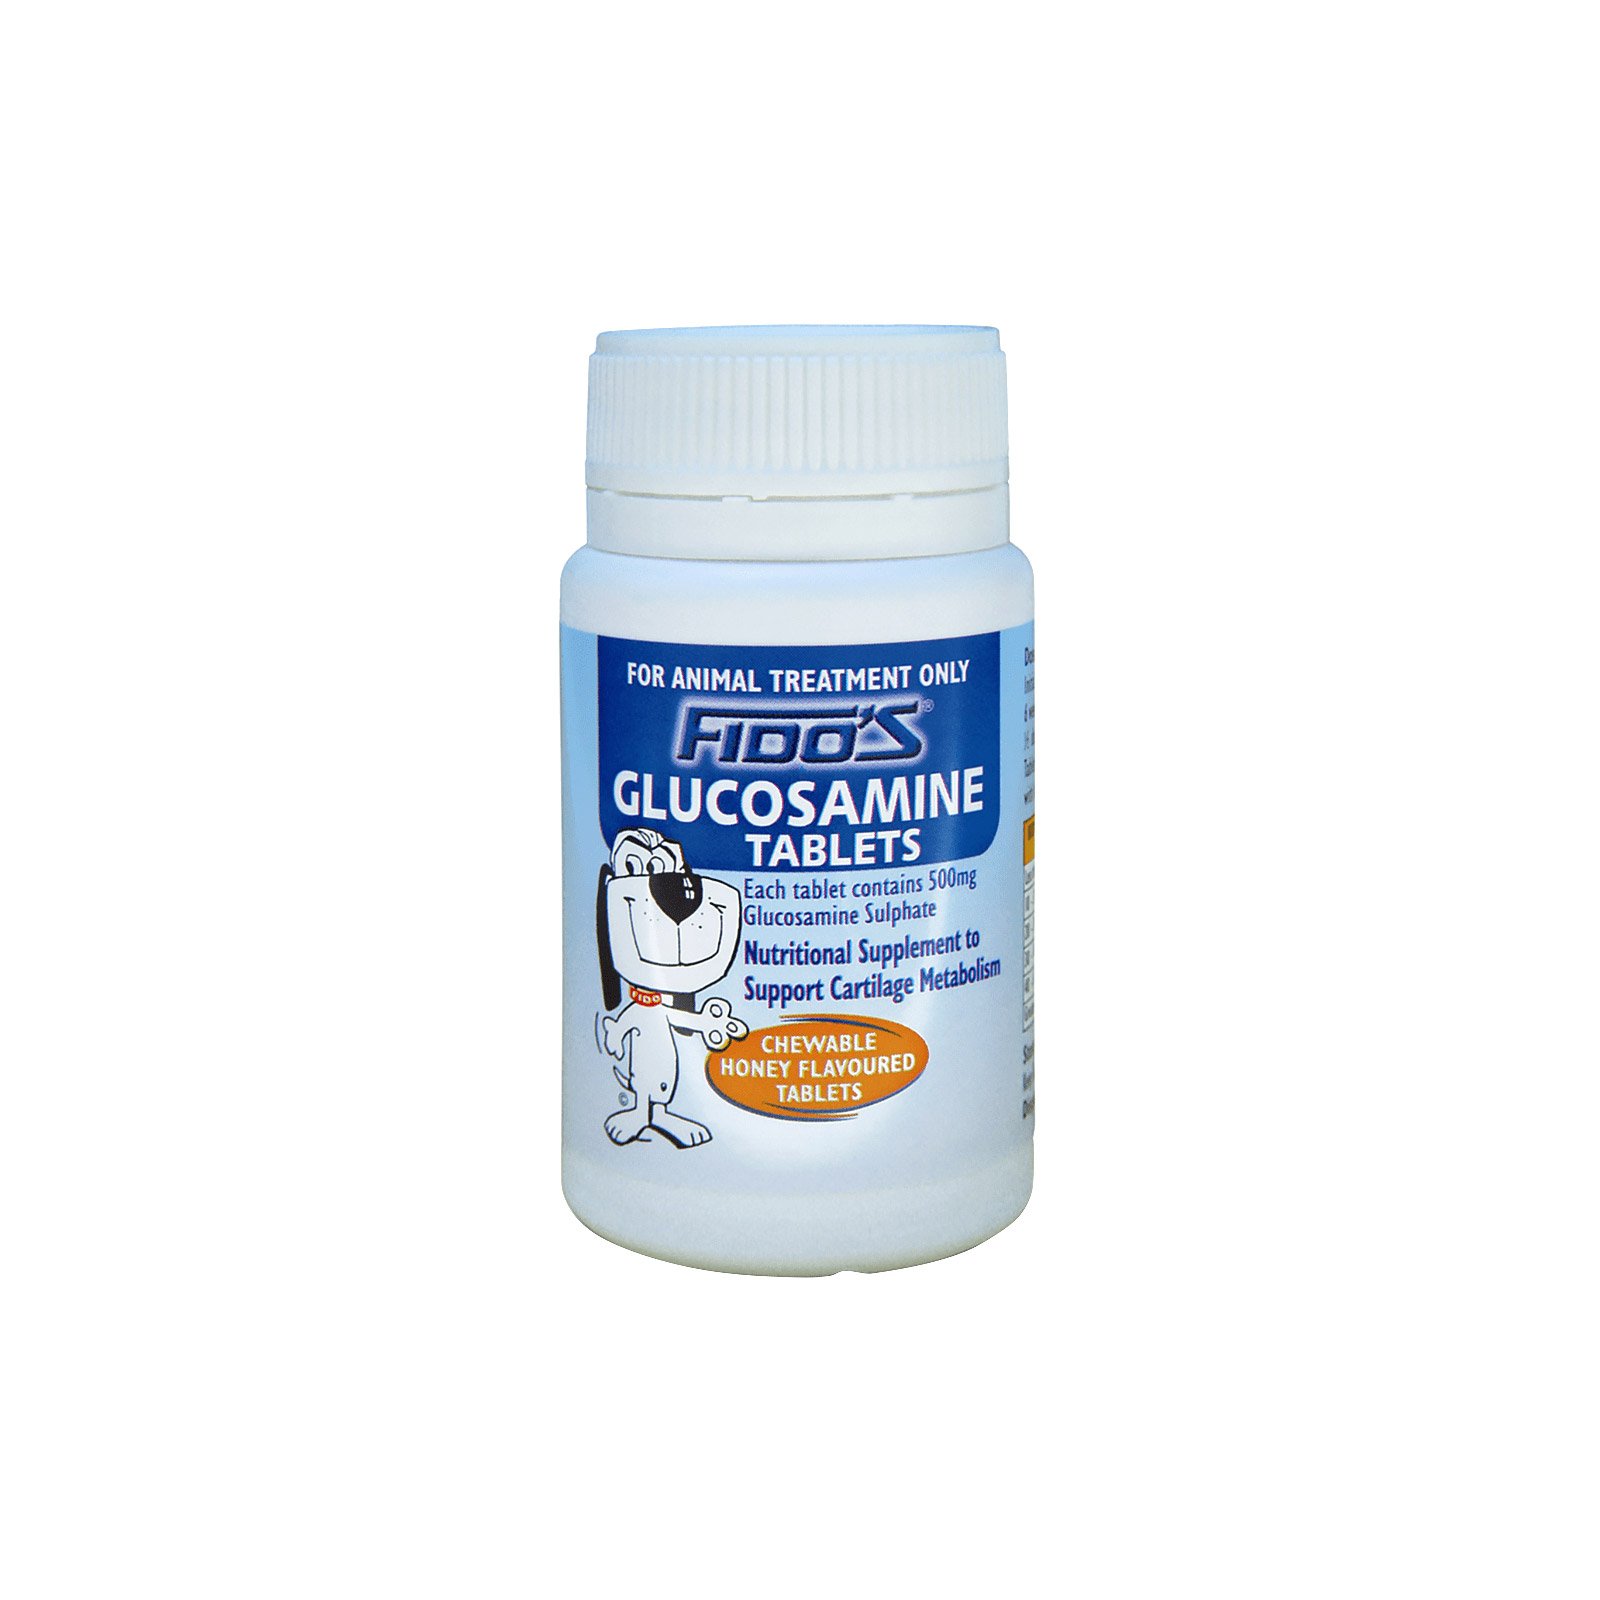 Fido's Glucosamine Tablets